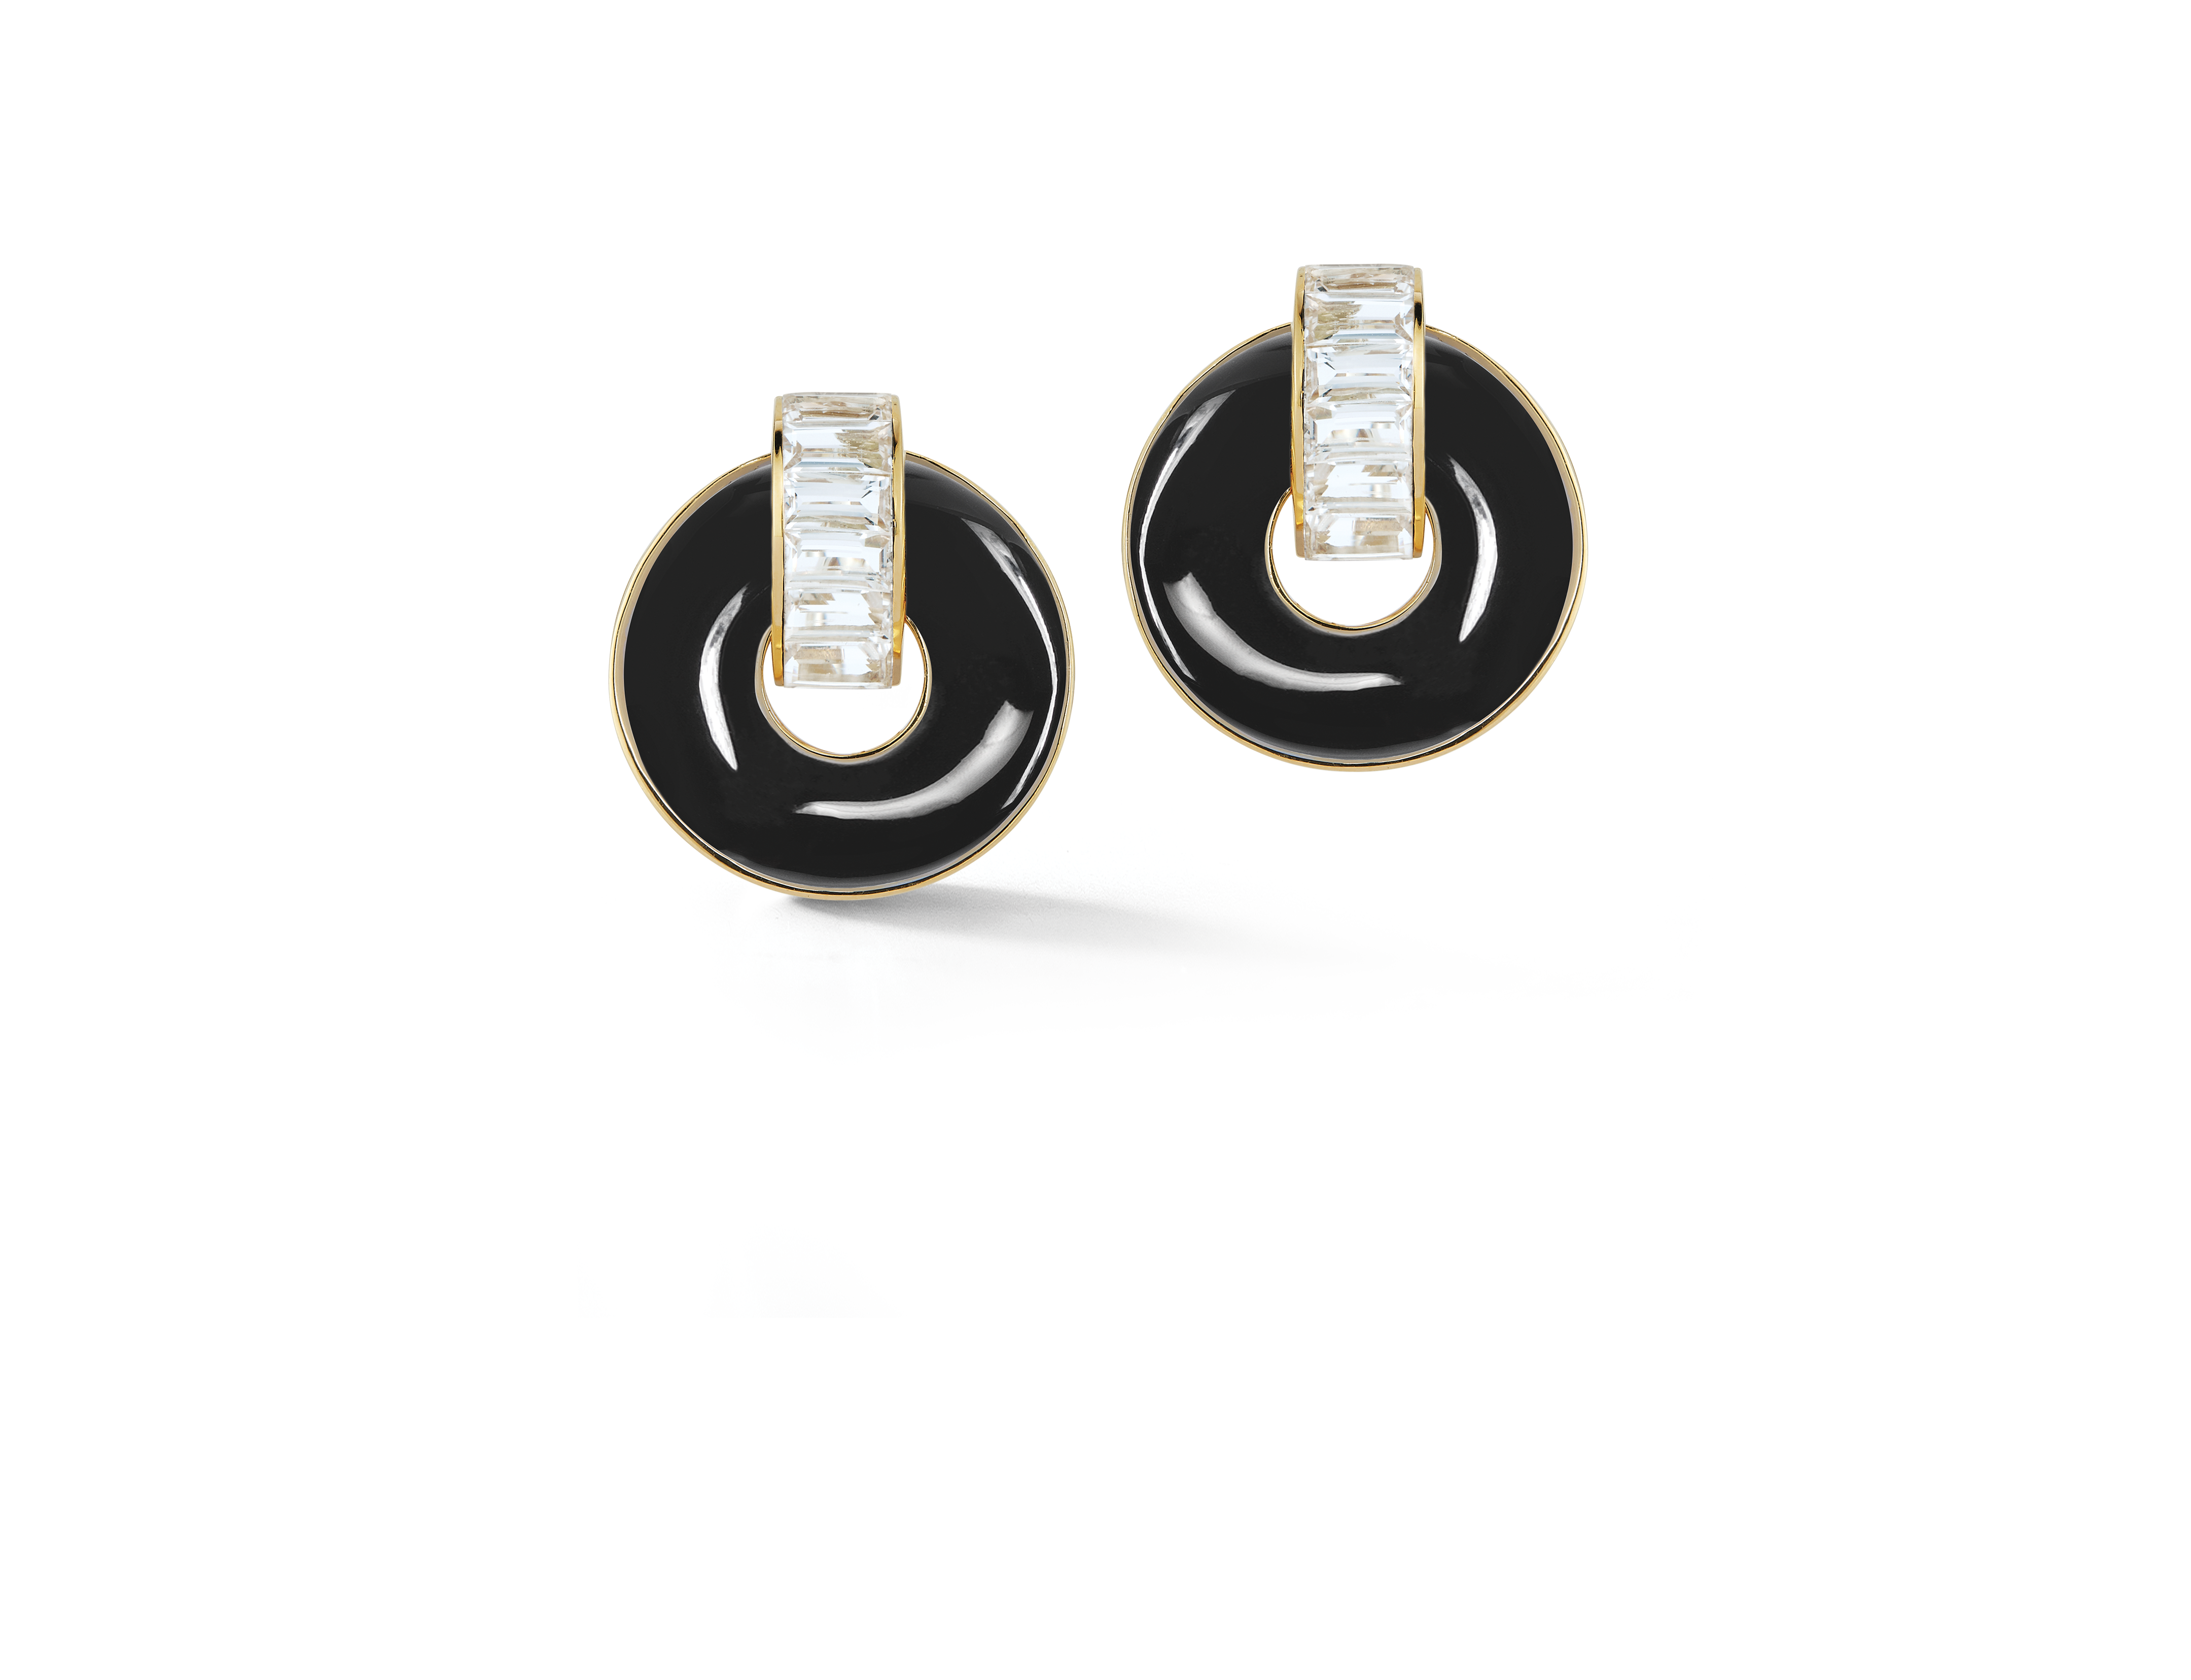 Giro Earrings in White Topaz, Black Onyx